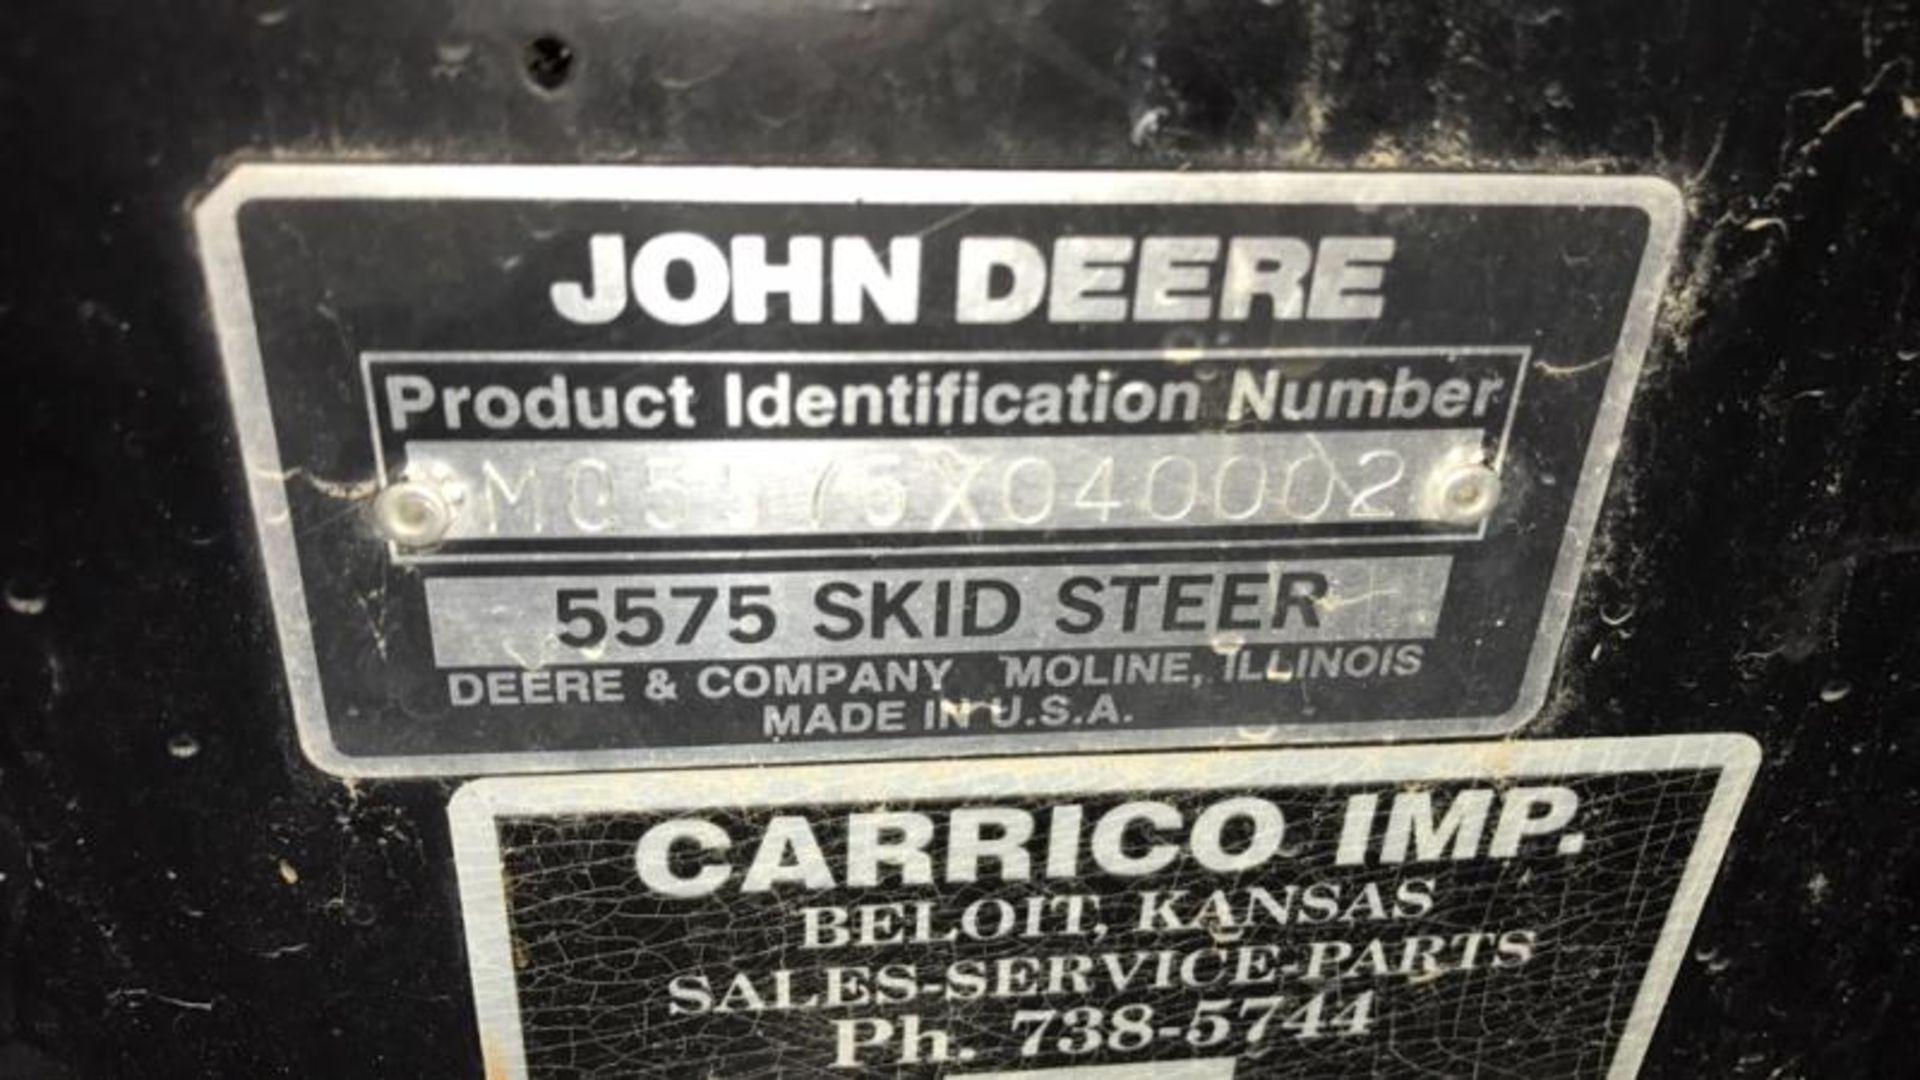 John Deere Skid Steer Loader, Model: 5575, Sn: MG5575X040002, 789.9 hours, w/ forks - Image 4 of 13